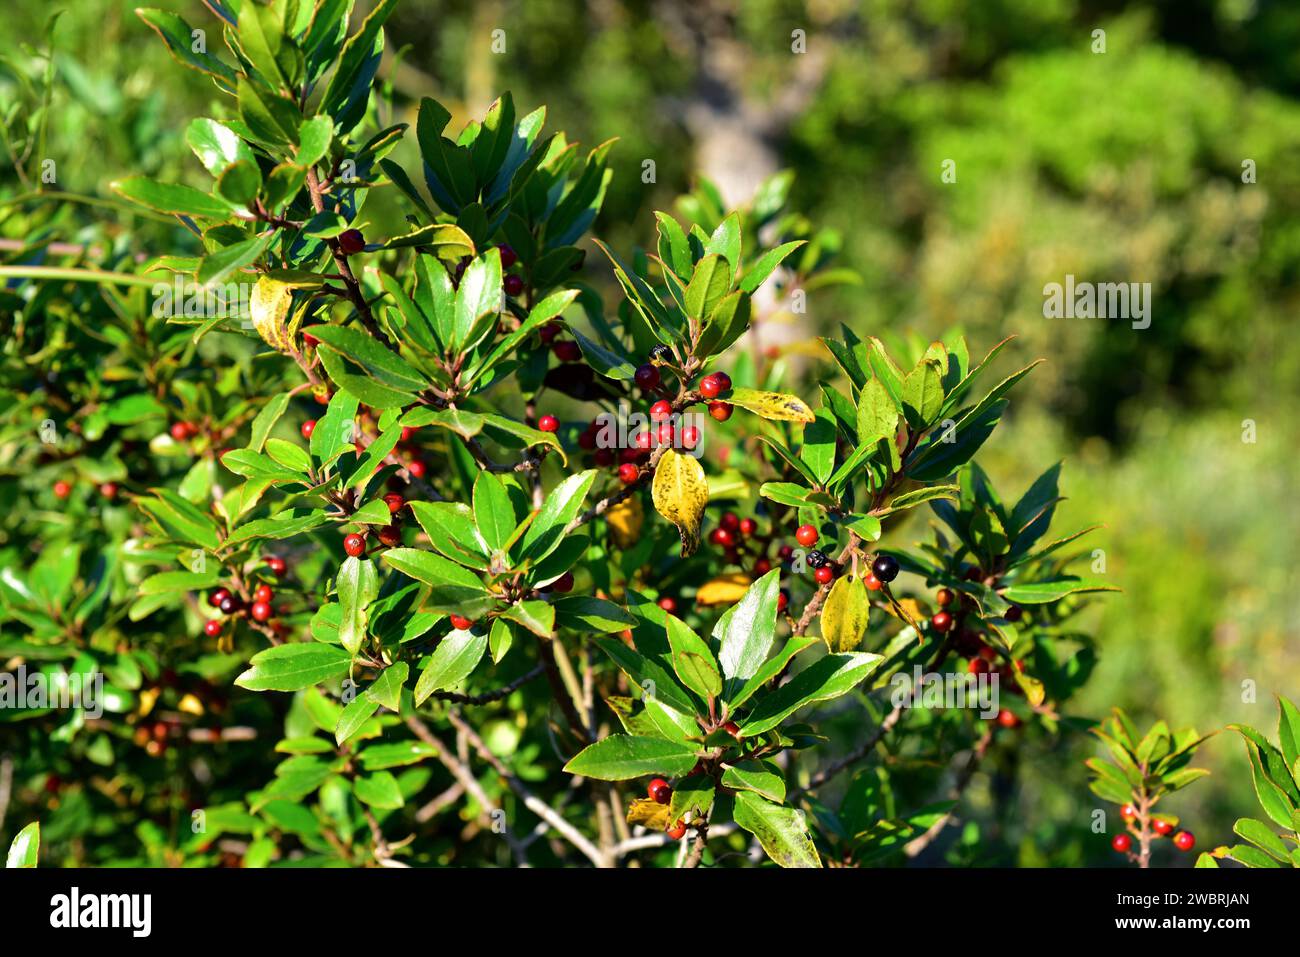 Mediterranean buckthorn (Rhamnus alaternus) is an evergreen shrub native to Mediterranean Basin. Fruits and leaves detail. This photo was taken in Men Stock Photo